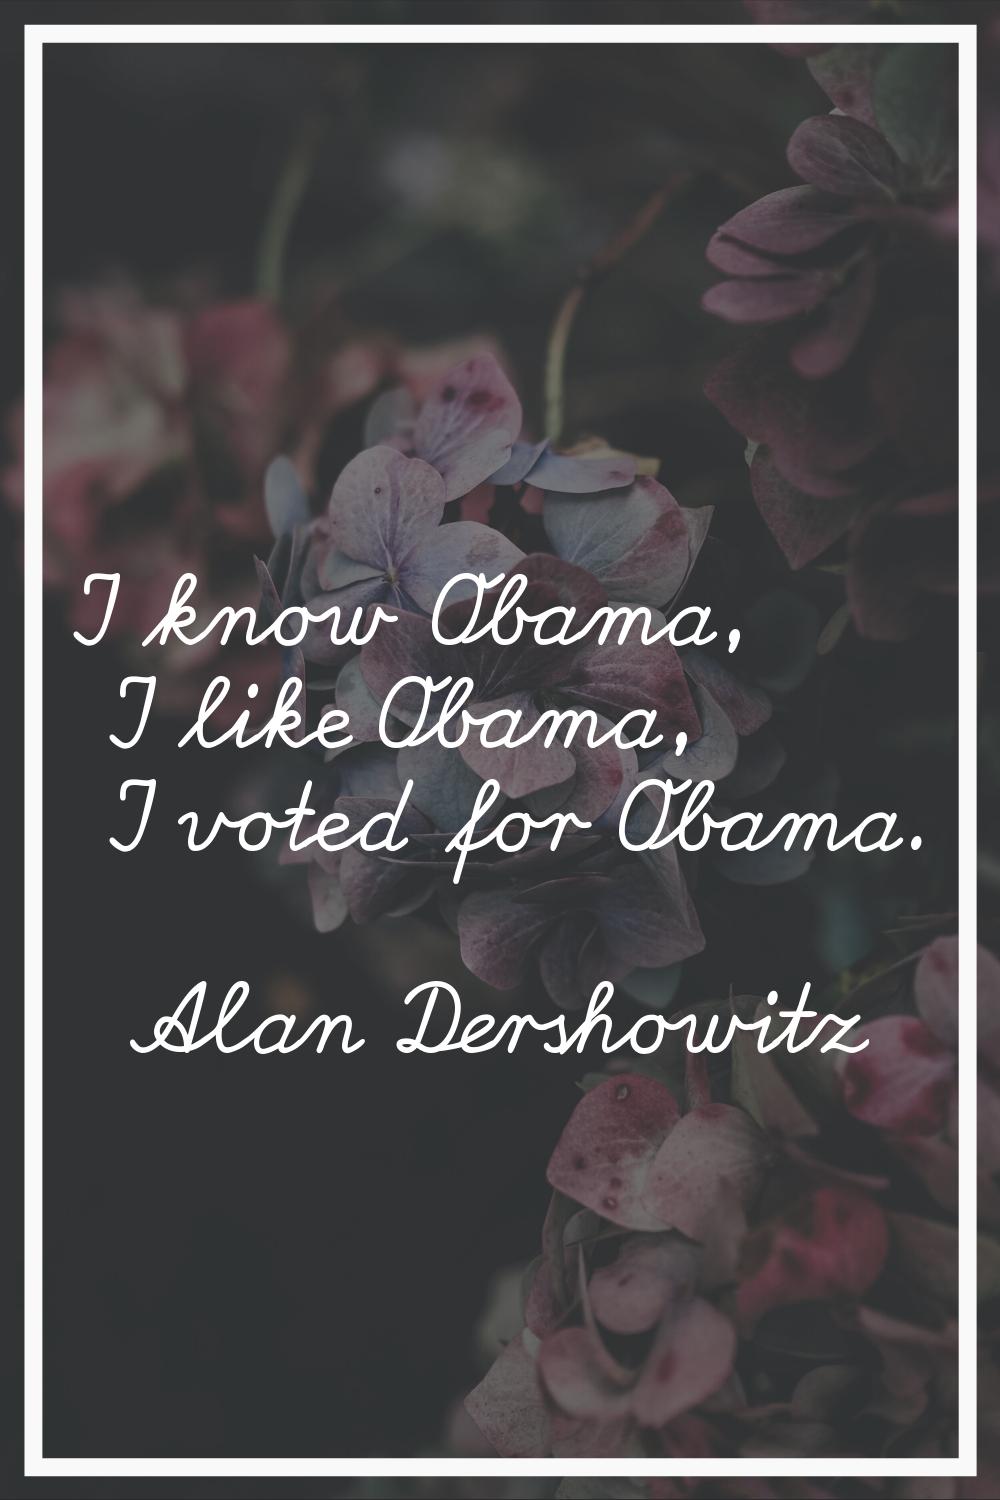 I know Obama, I like Obama, I voted for Obama.